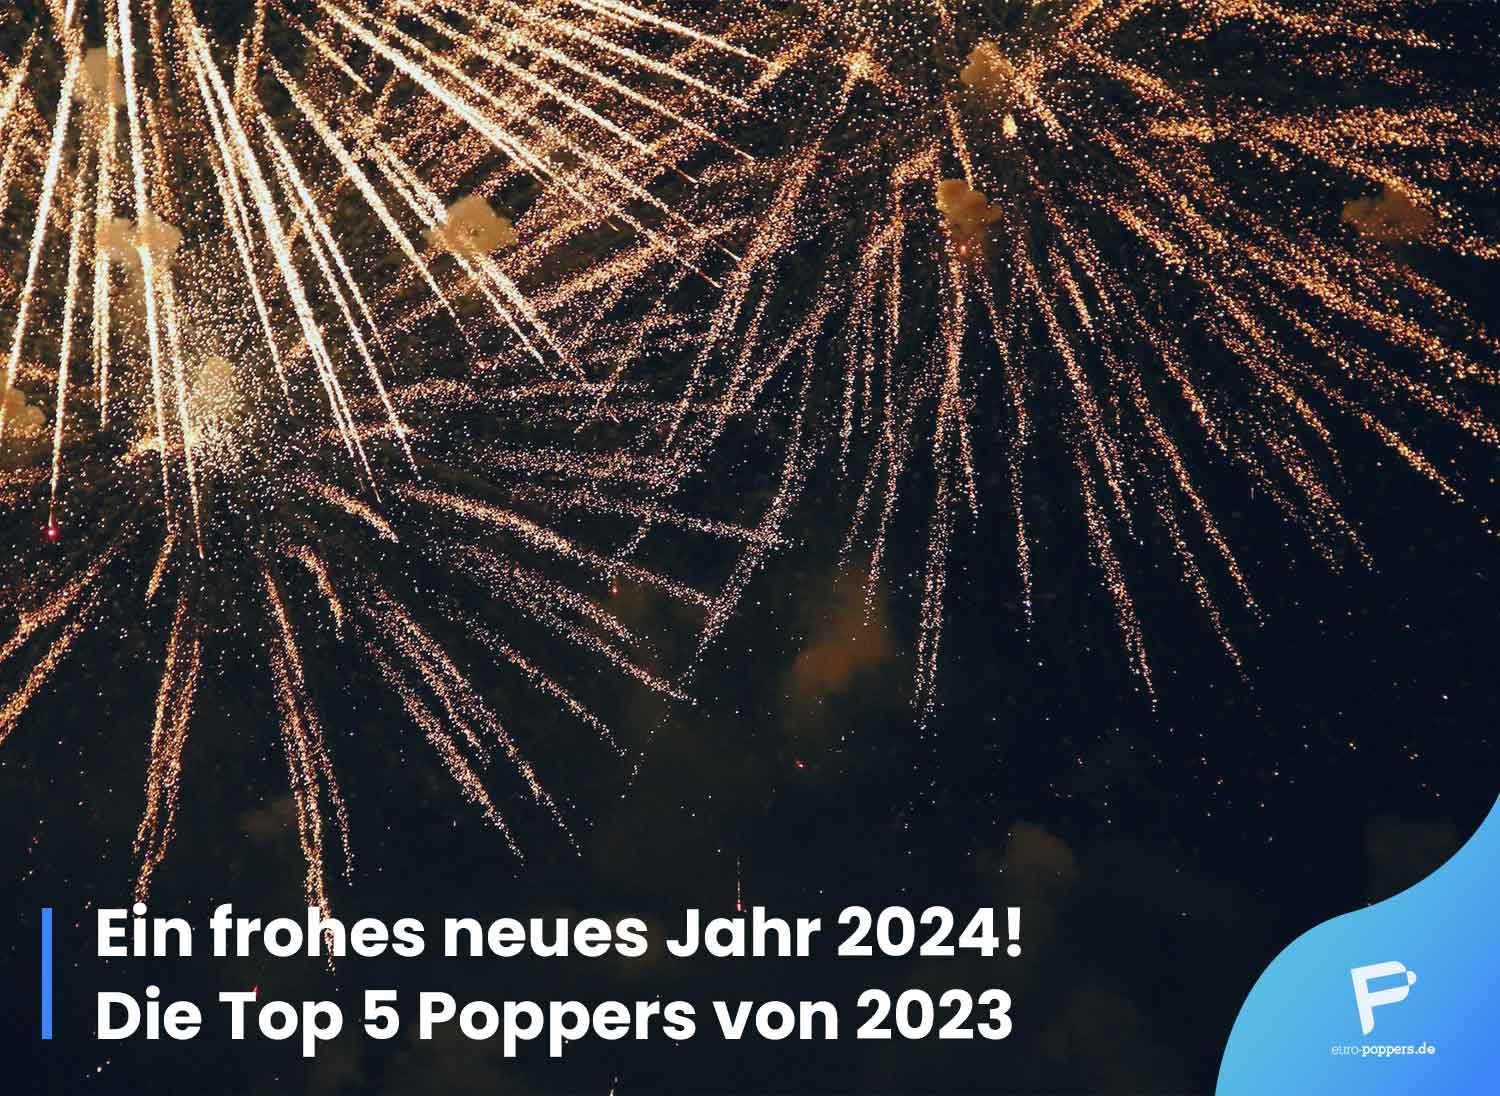 You are currently viewing Ein frohes neues Jahr 2024! Die Top 5 Poppers von 2023